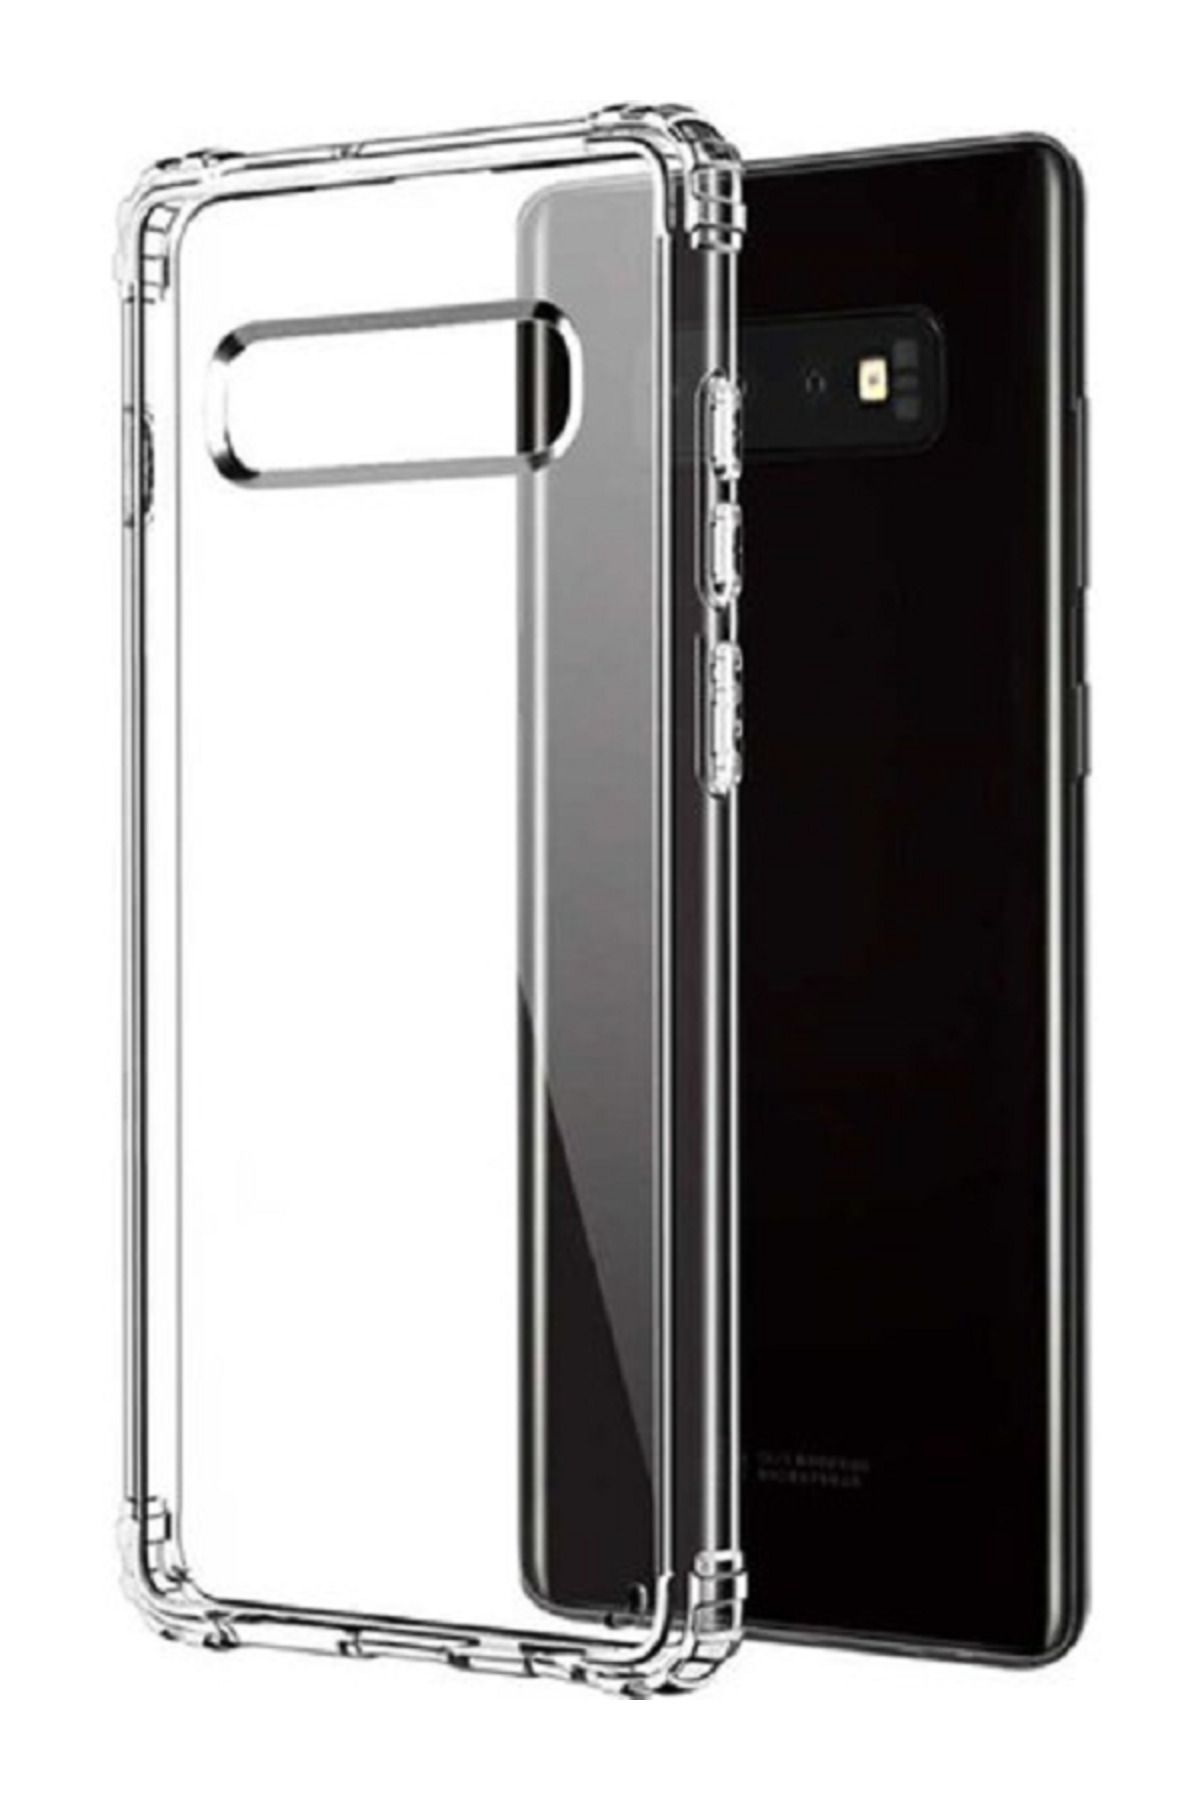 Fibaks Samsung Galaxy S10 Plus Kılıf Crystal Sert Pc Antishock Darbe Emici Kenar Şeffaf Silikon Kapak